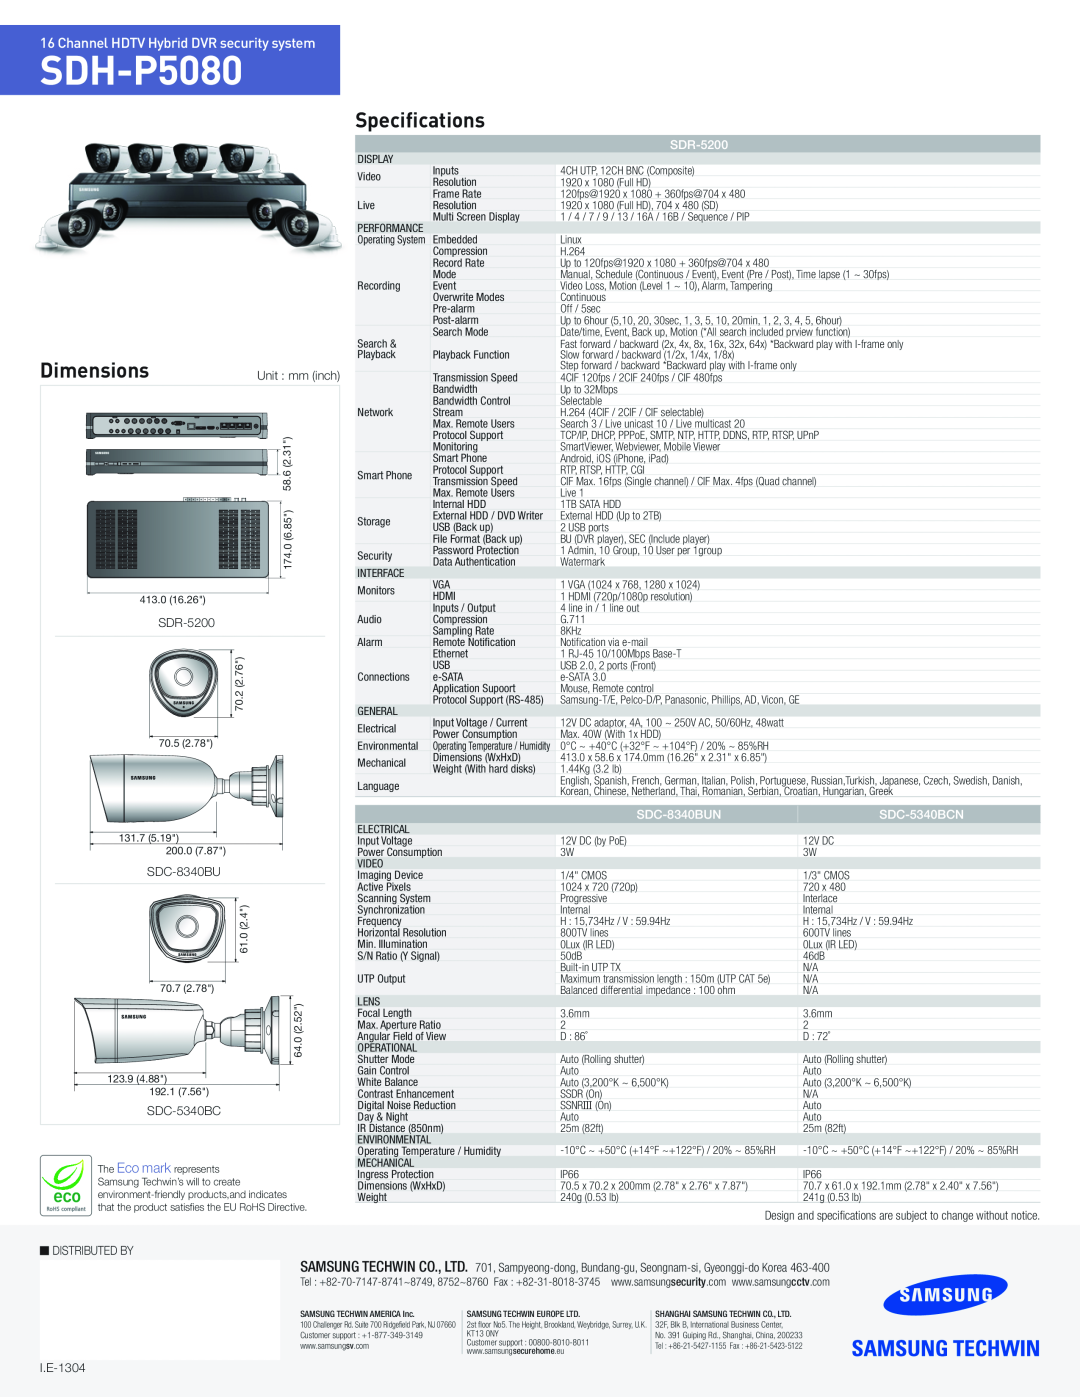 Samsung SDC8340BU SDH-P5080, Dimensions, Specifications, Channel HDTV Hybrid DVR security system, SDR-5200, SDC-8340BUN 